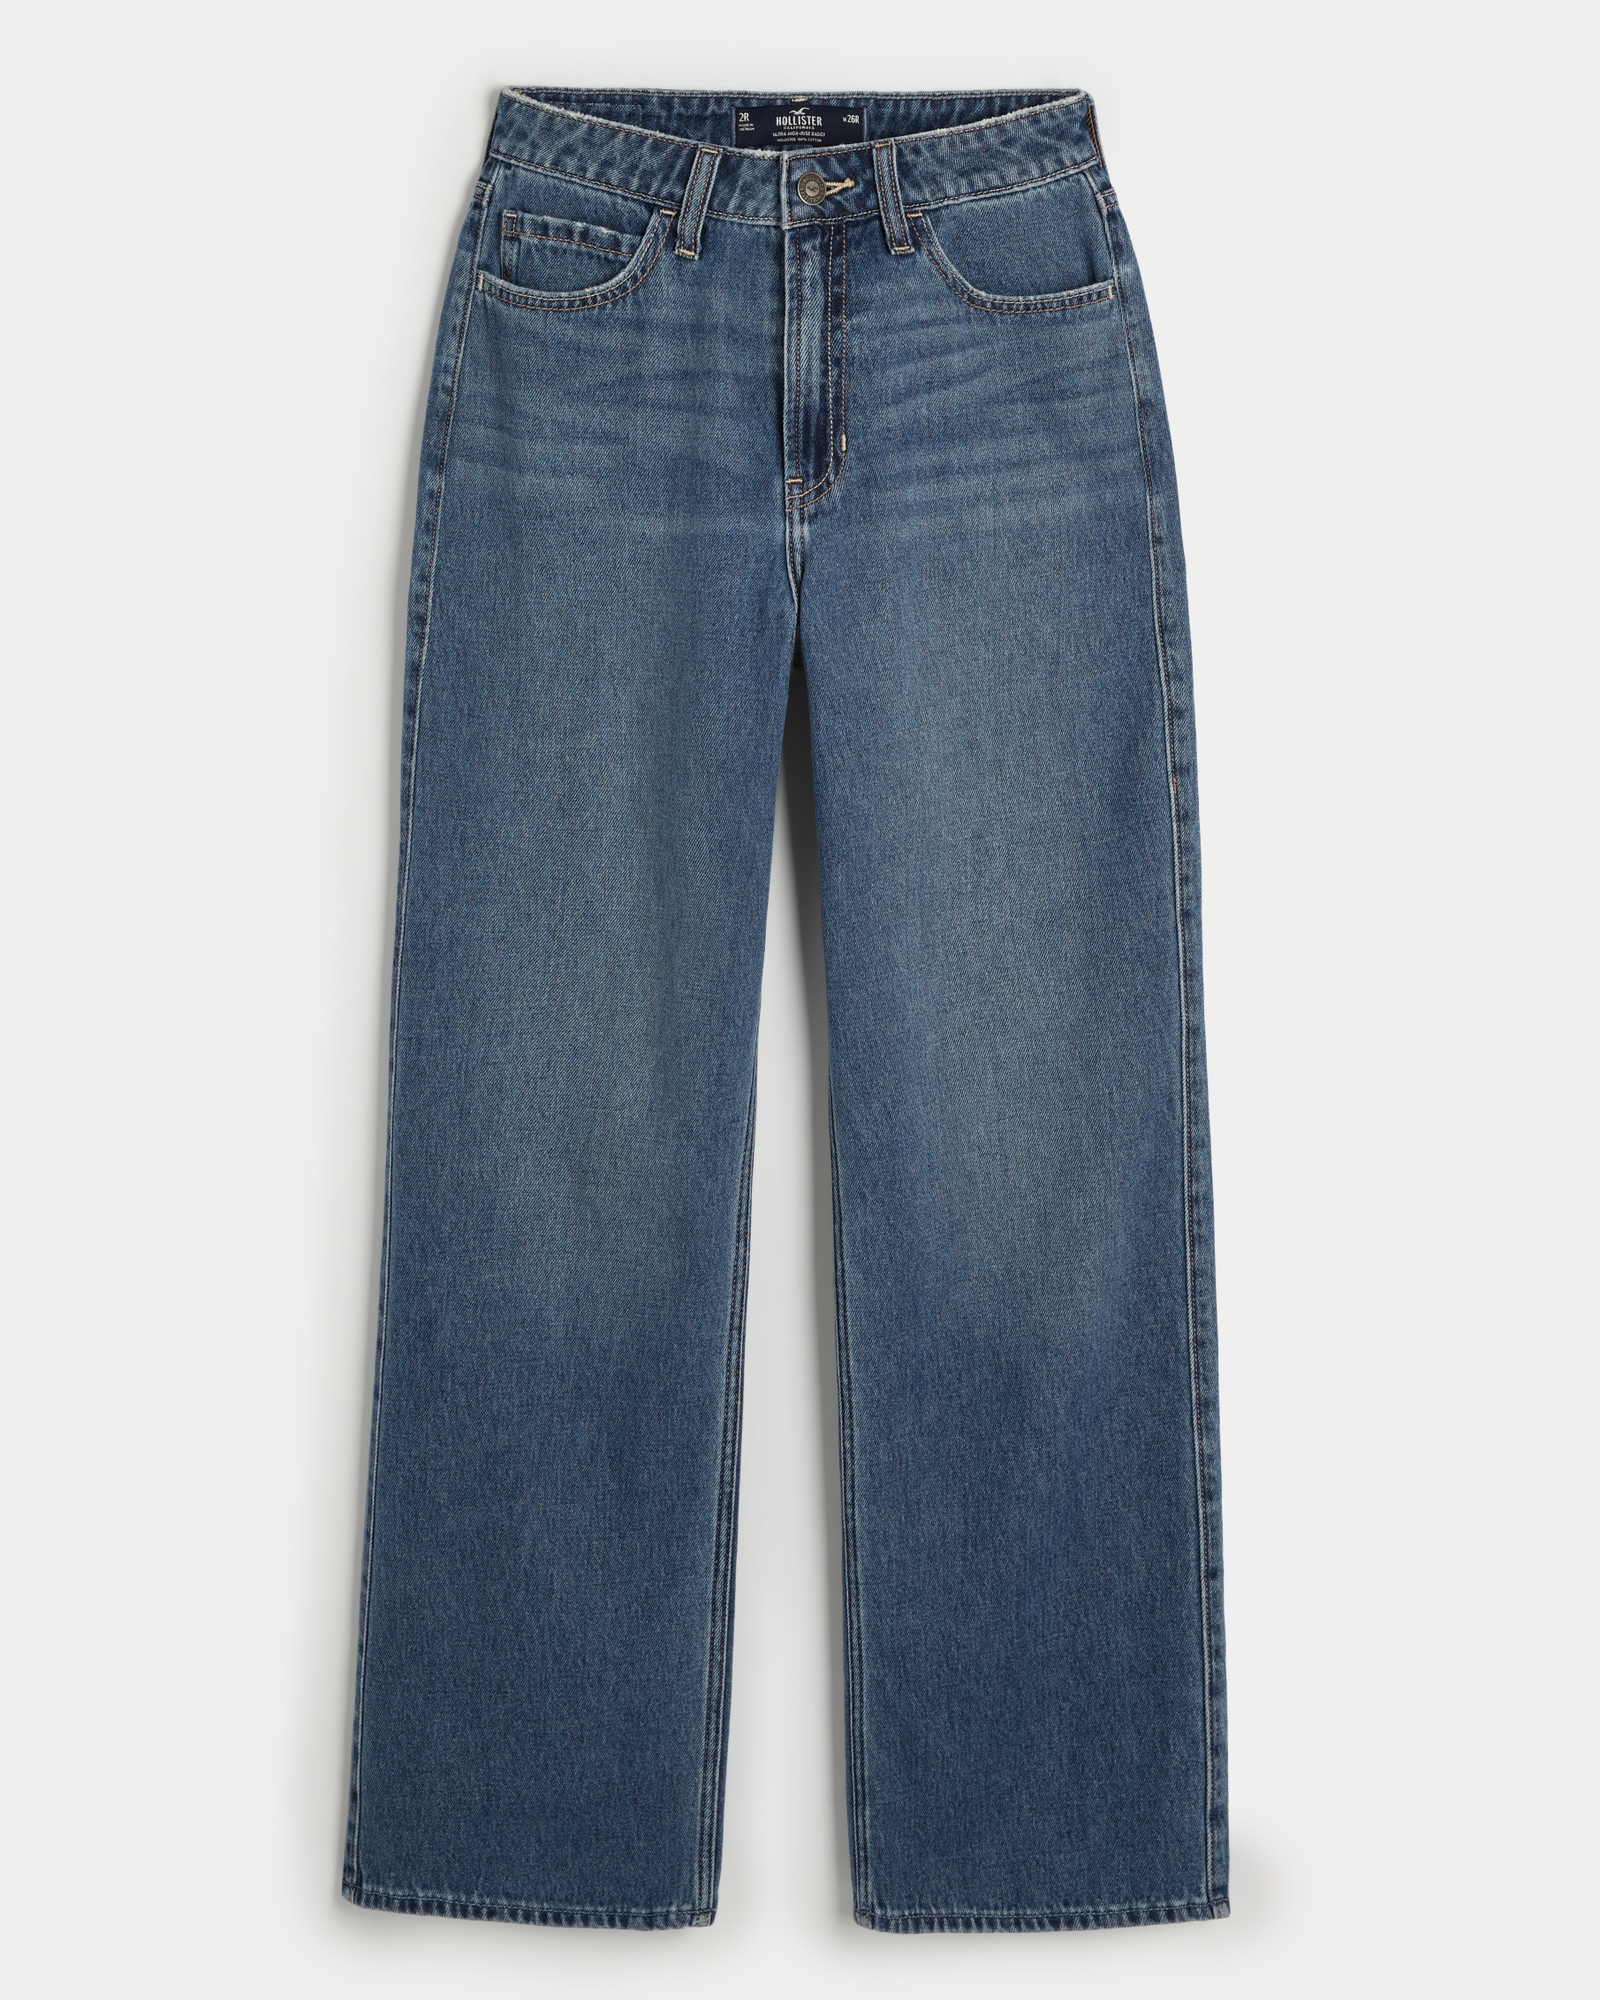 Hollister jeans